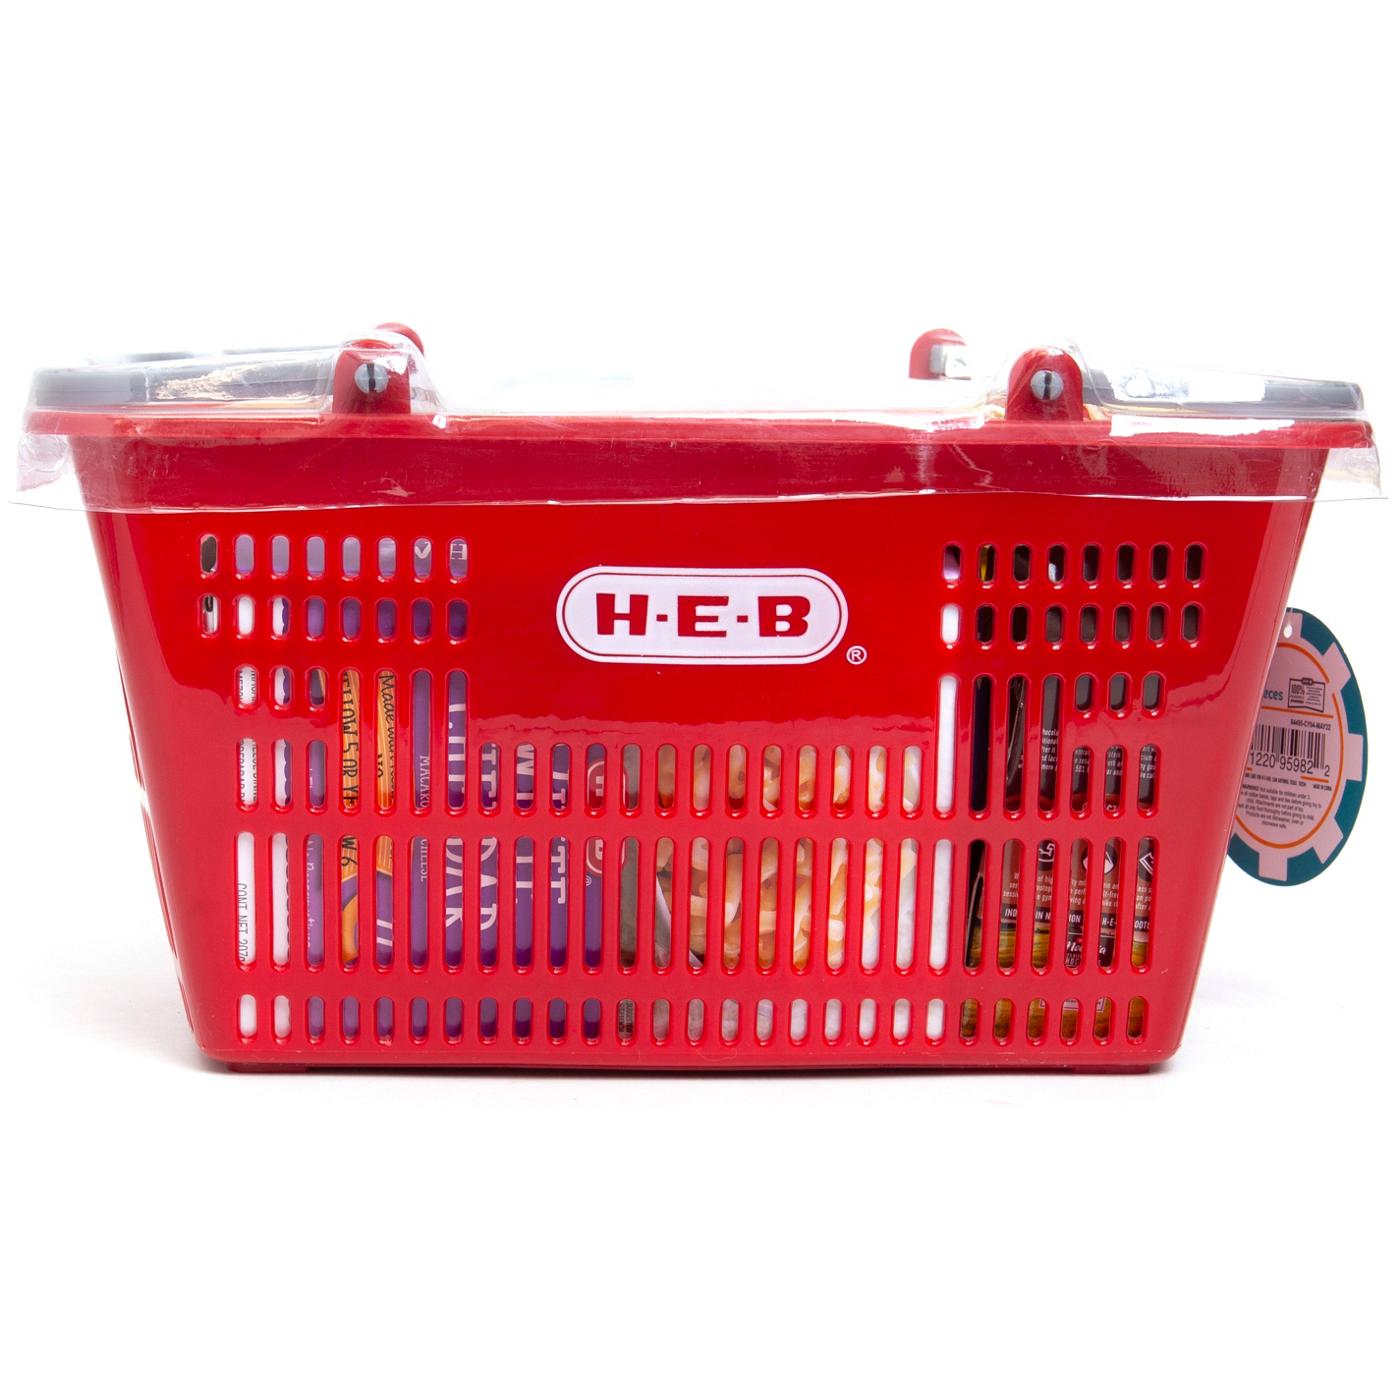 H-E-B Kids Play Food Basket - Red - Shop Dress Up & Pretend Play